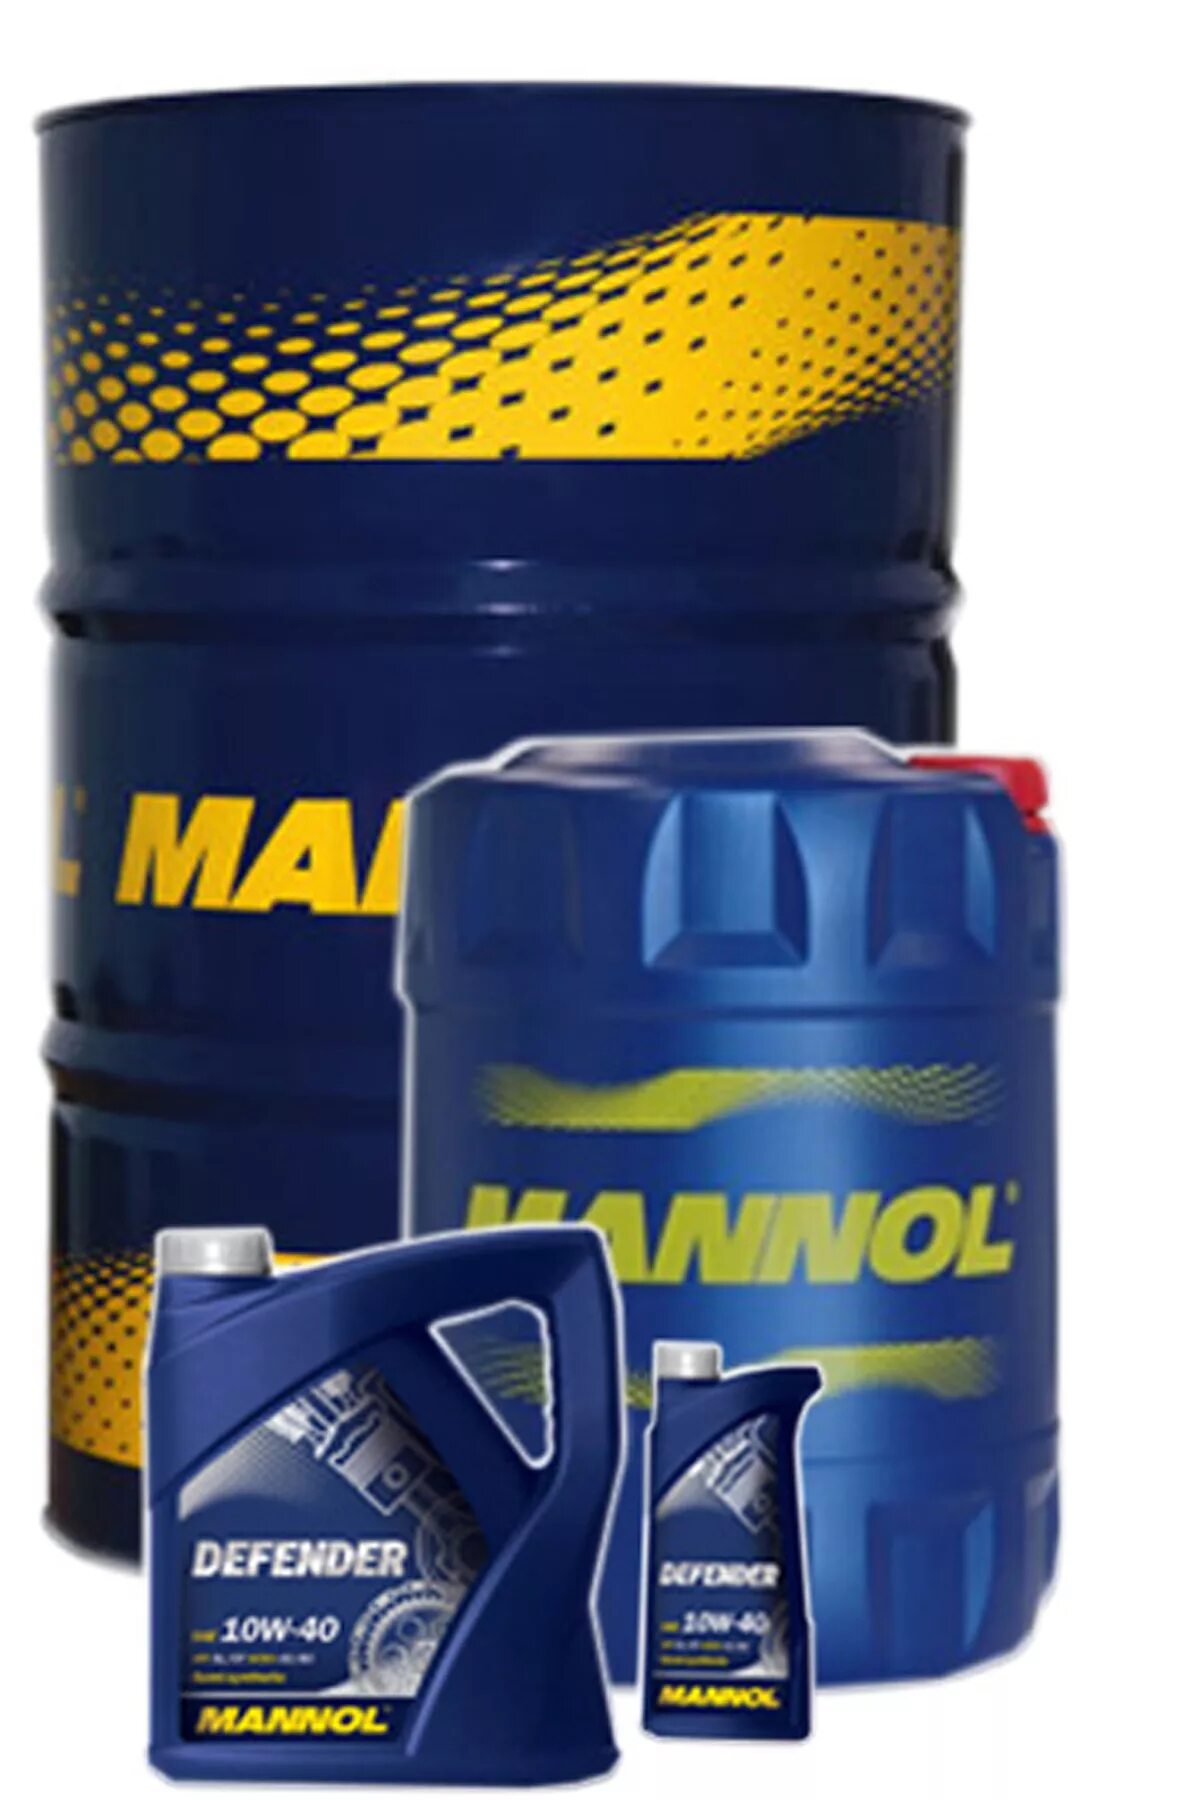 Defender oil. Маннол Дефендер 10-40. 10w 40 20л Mannol. Mannol 10w 40 полусинтетика. Масло моторное Defender, 10w40.